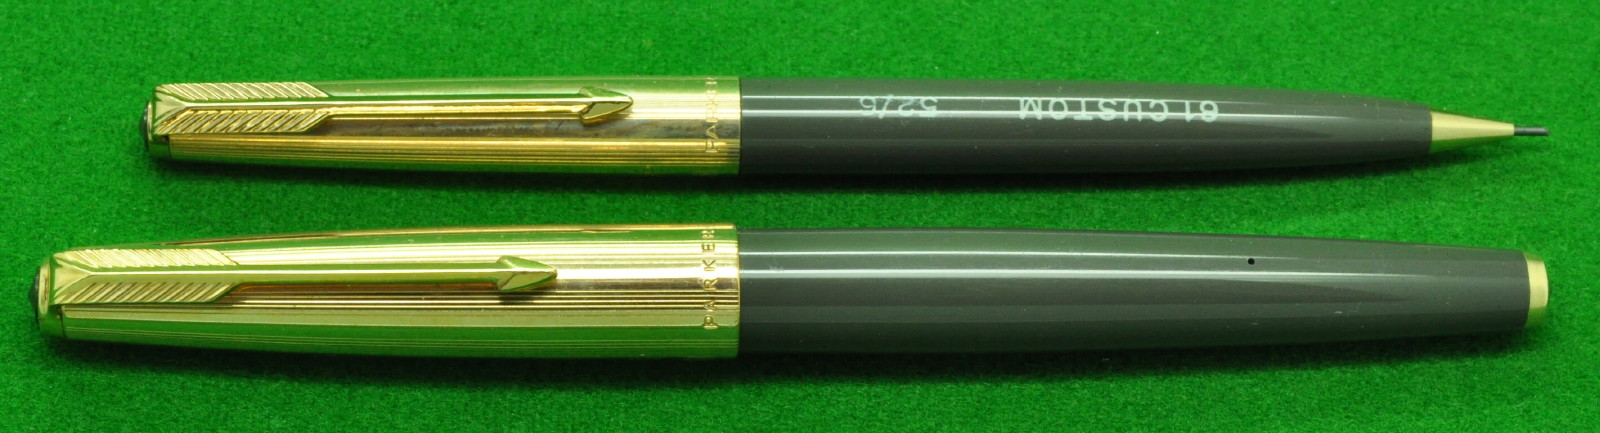 Parker Pen 61 Prototype Capillary Fountain Pen Filler System Sample Set RARE!!! 